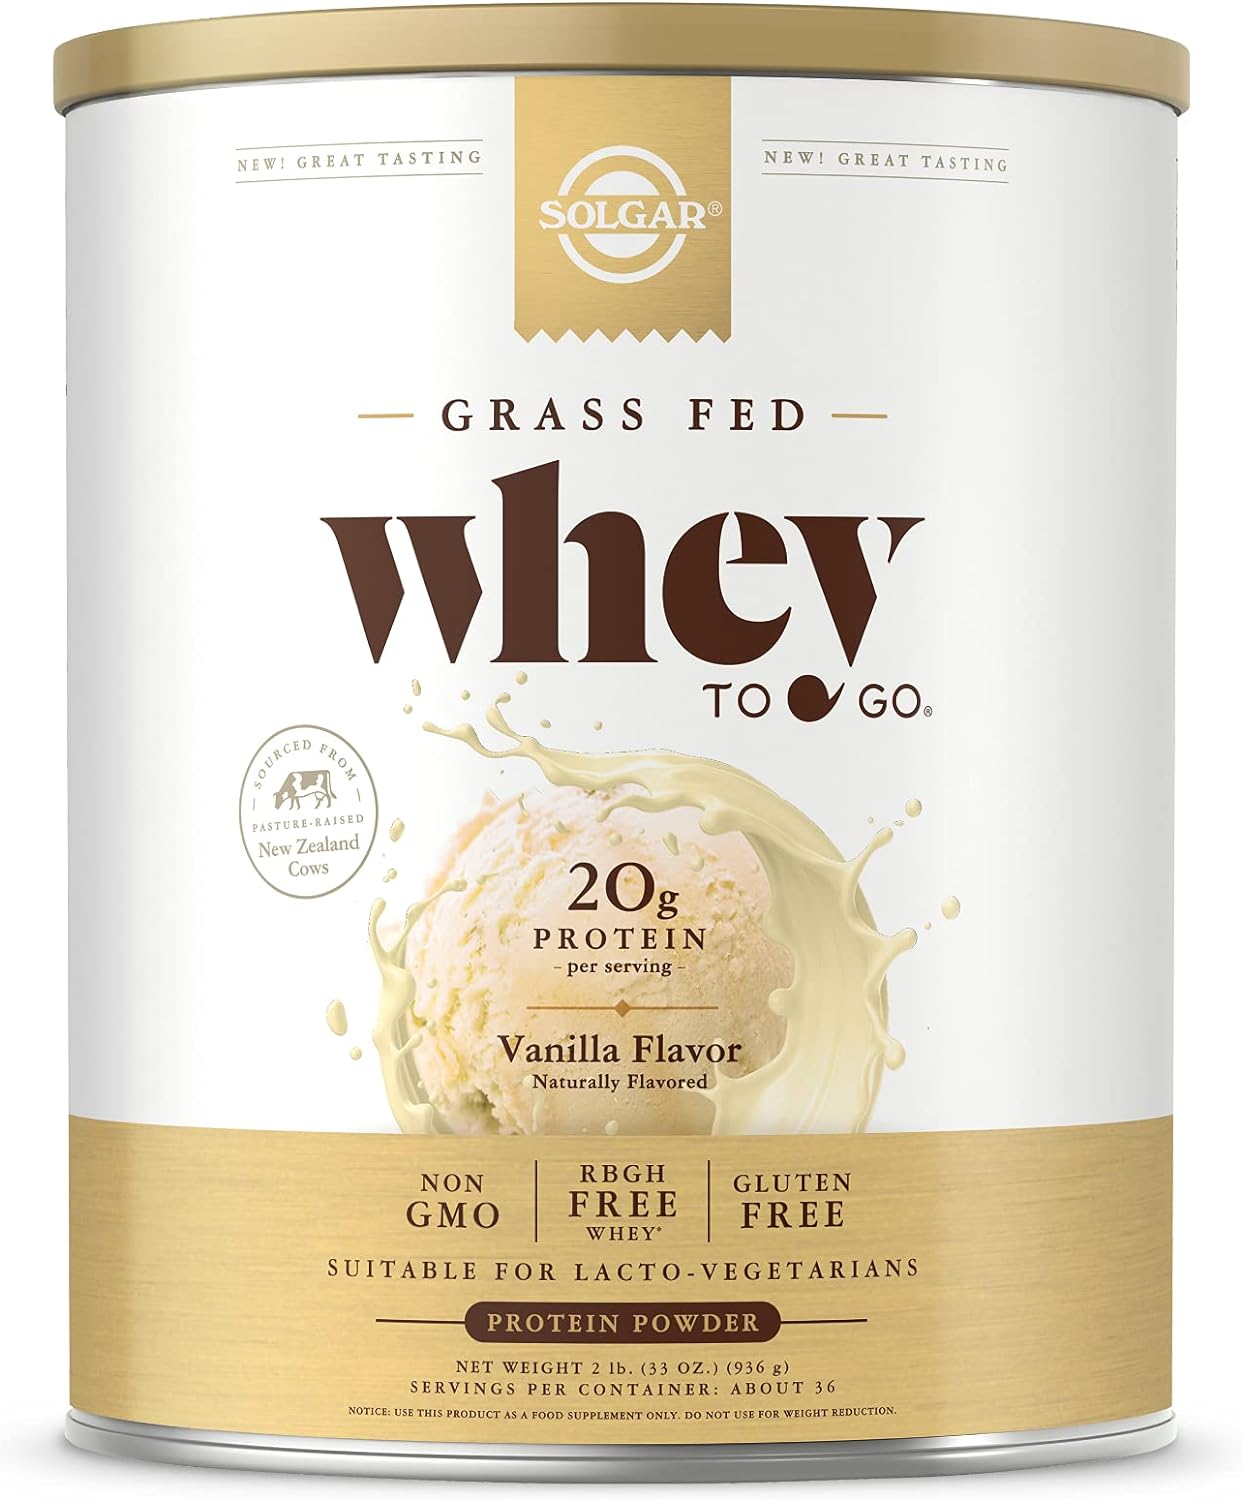 Solgar Grass Fed Whey to Go Protein Powder Vanilla, 2 lb - 20g of Gras